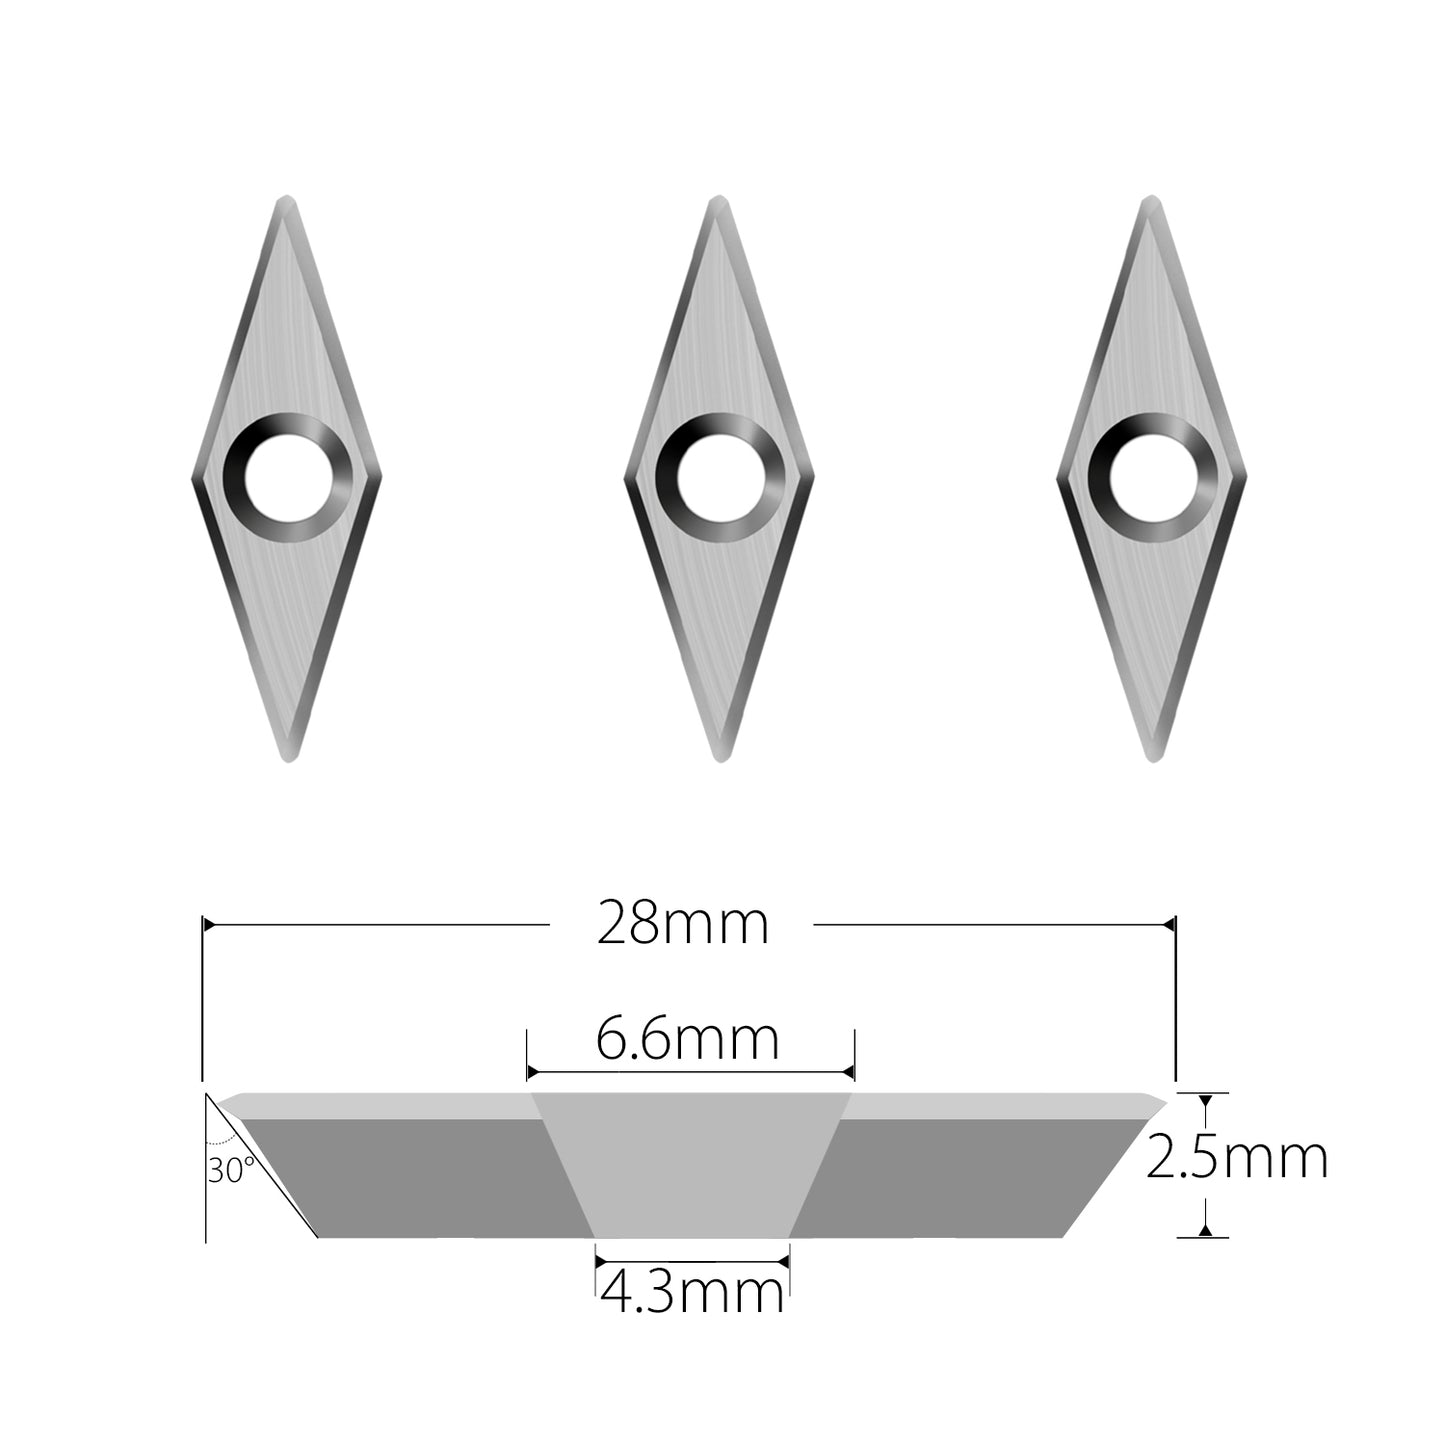 Woodturning carbide insert diamond shape cutter negative rake angle 10 mm x 28 mm x 2.5 mm with 30 degree cutting bevel